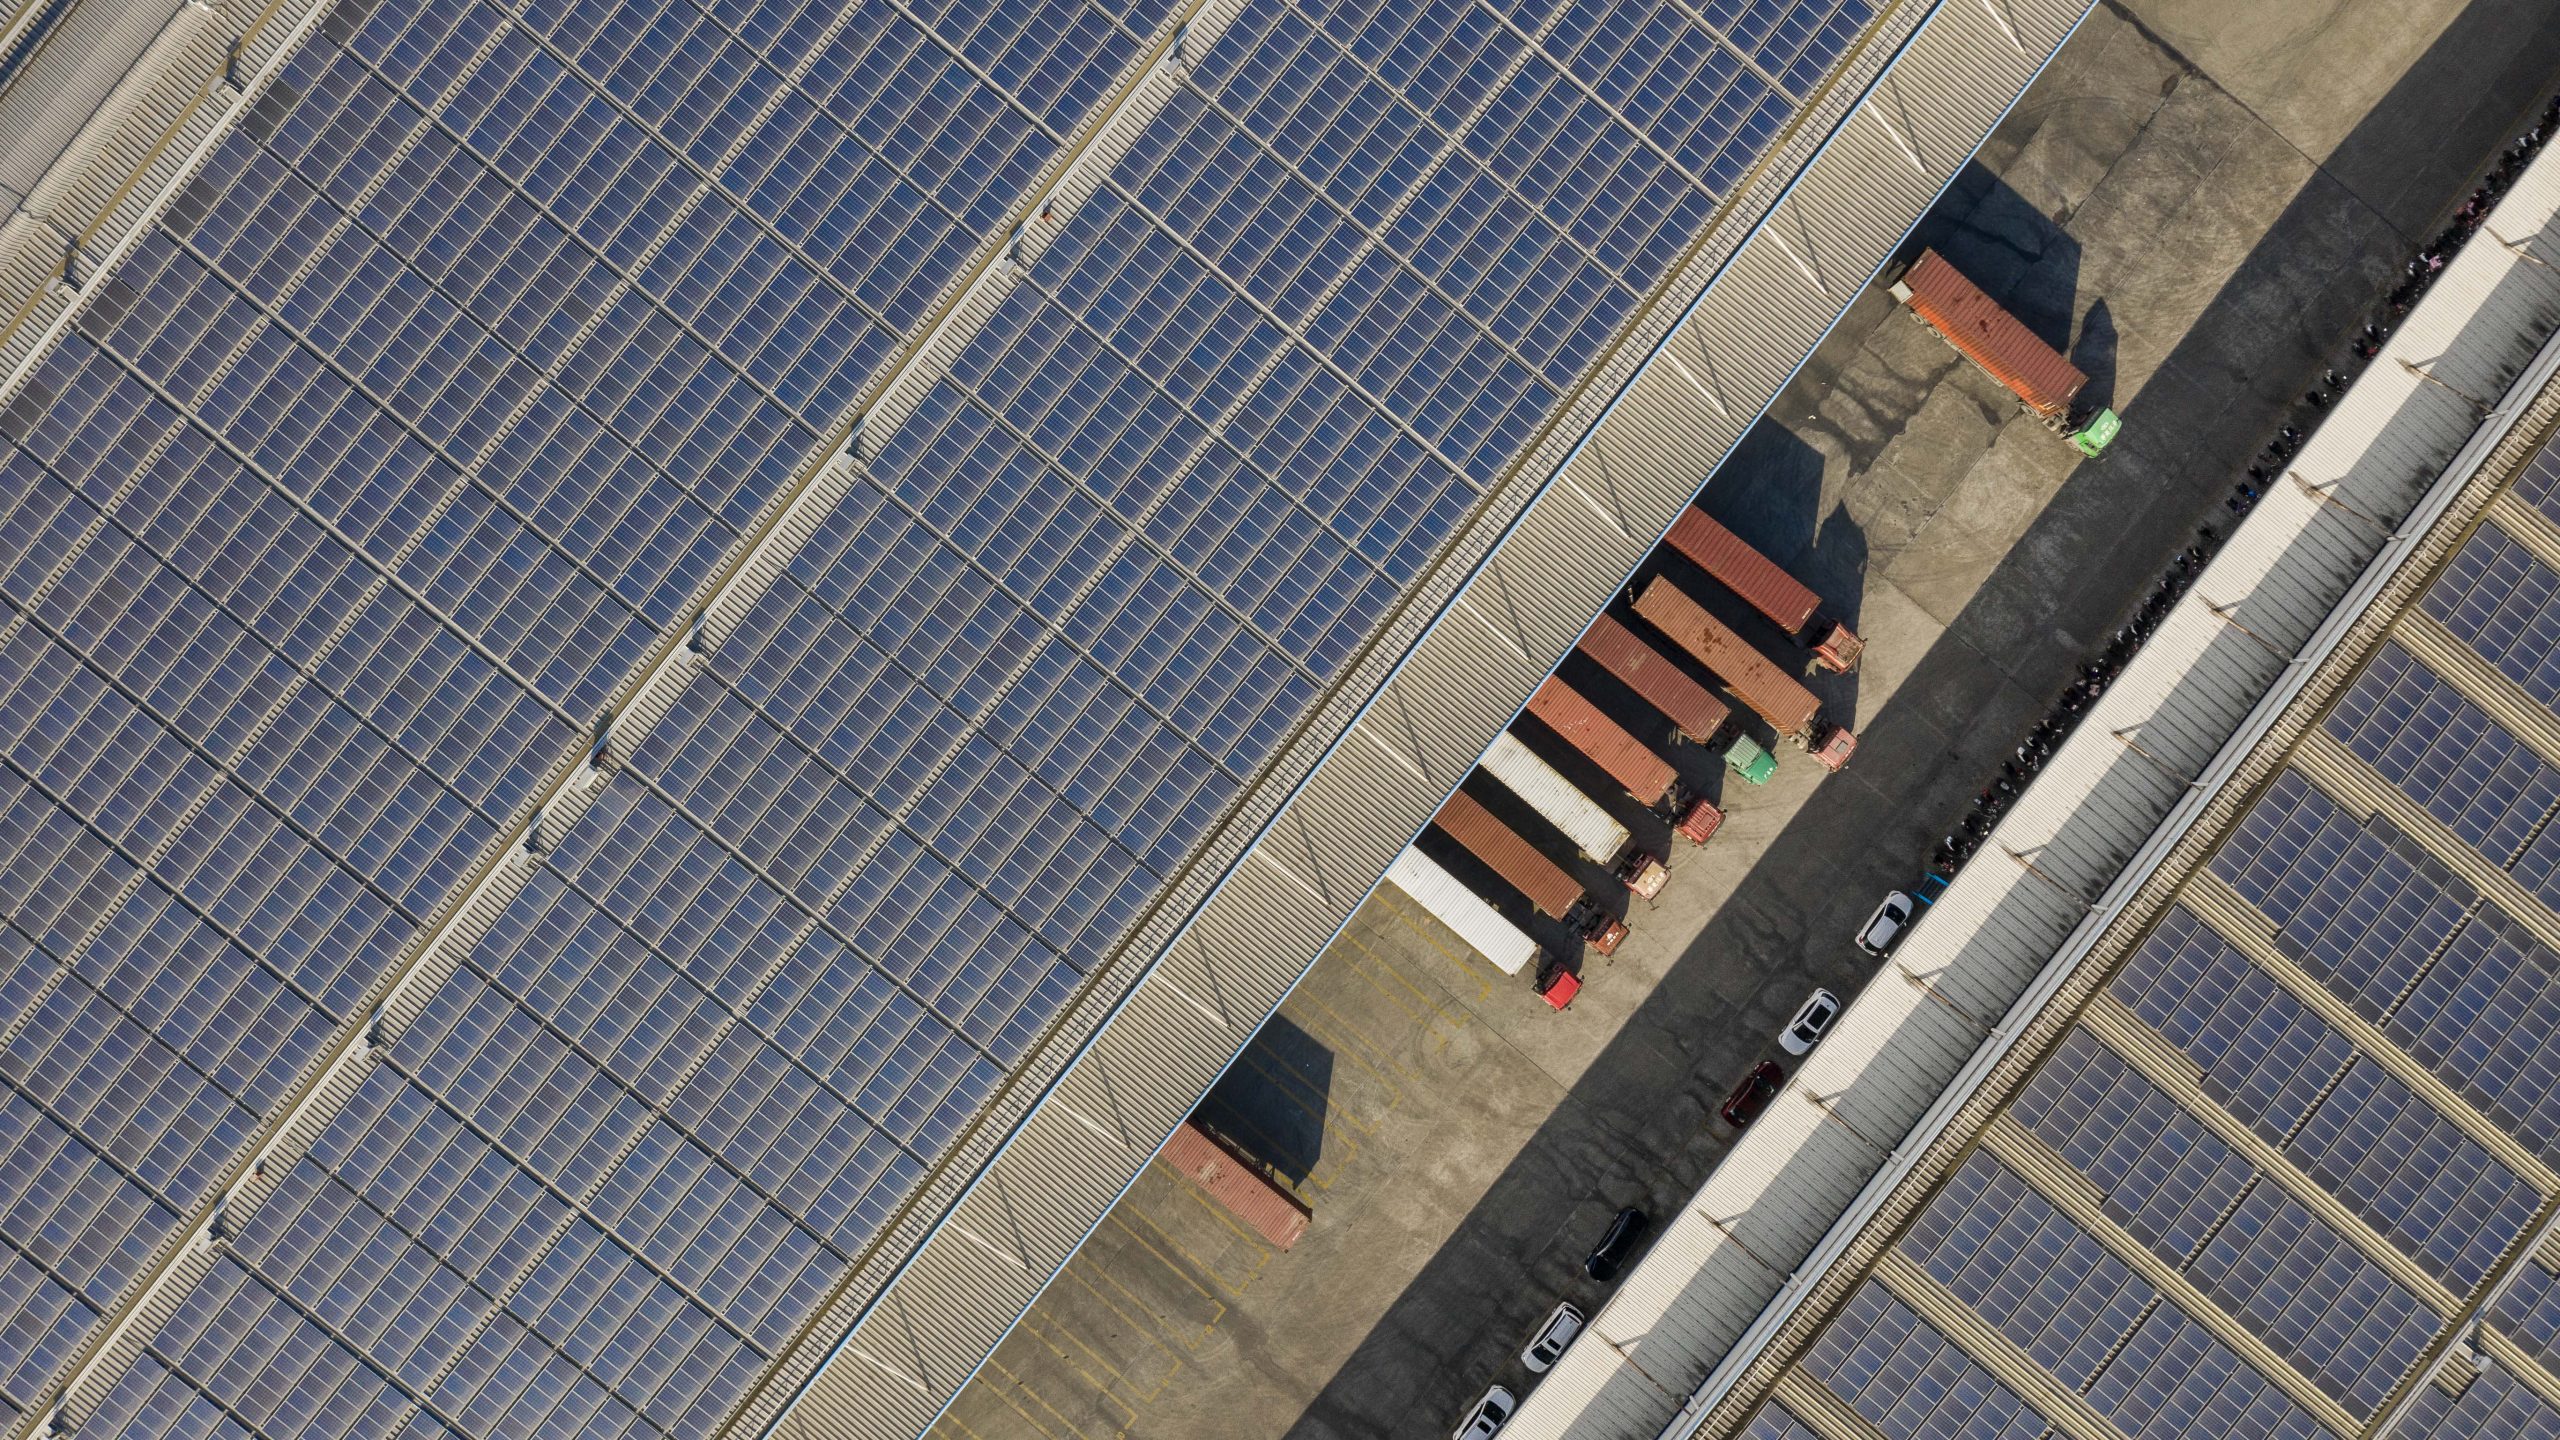 Drone photography China, factory roof filled with solar panels, trucks underneath. Photographer Tuomas Harjumaaskola.